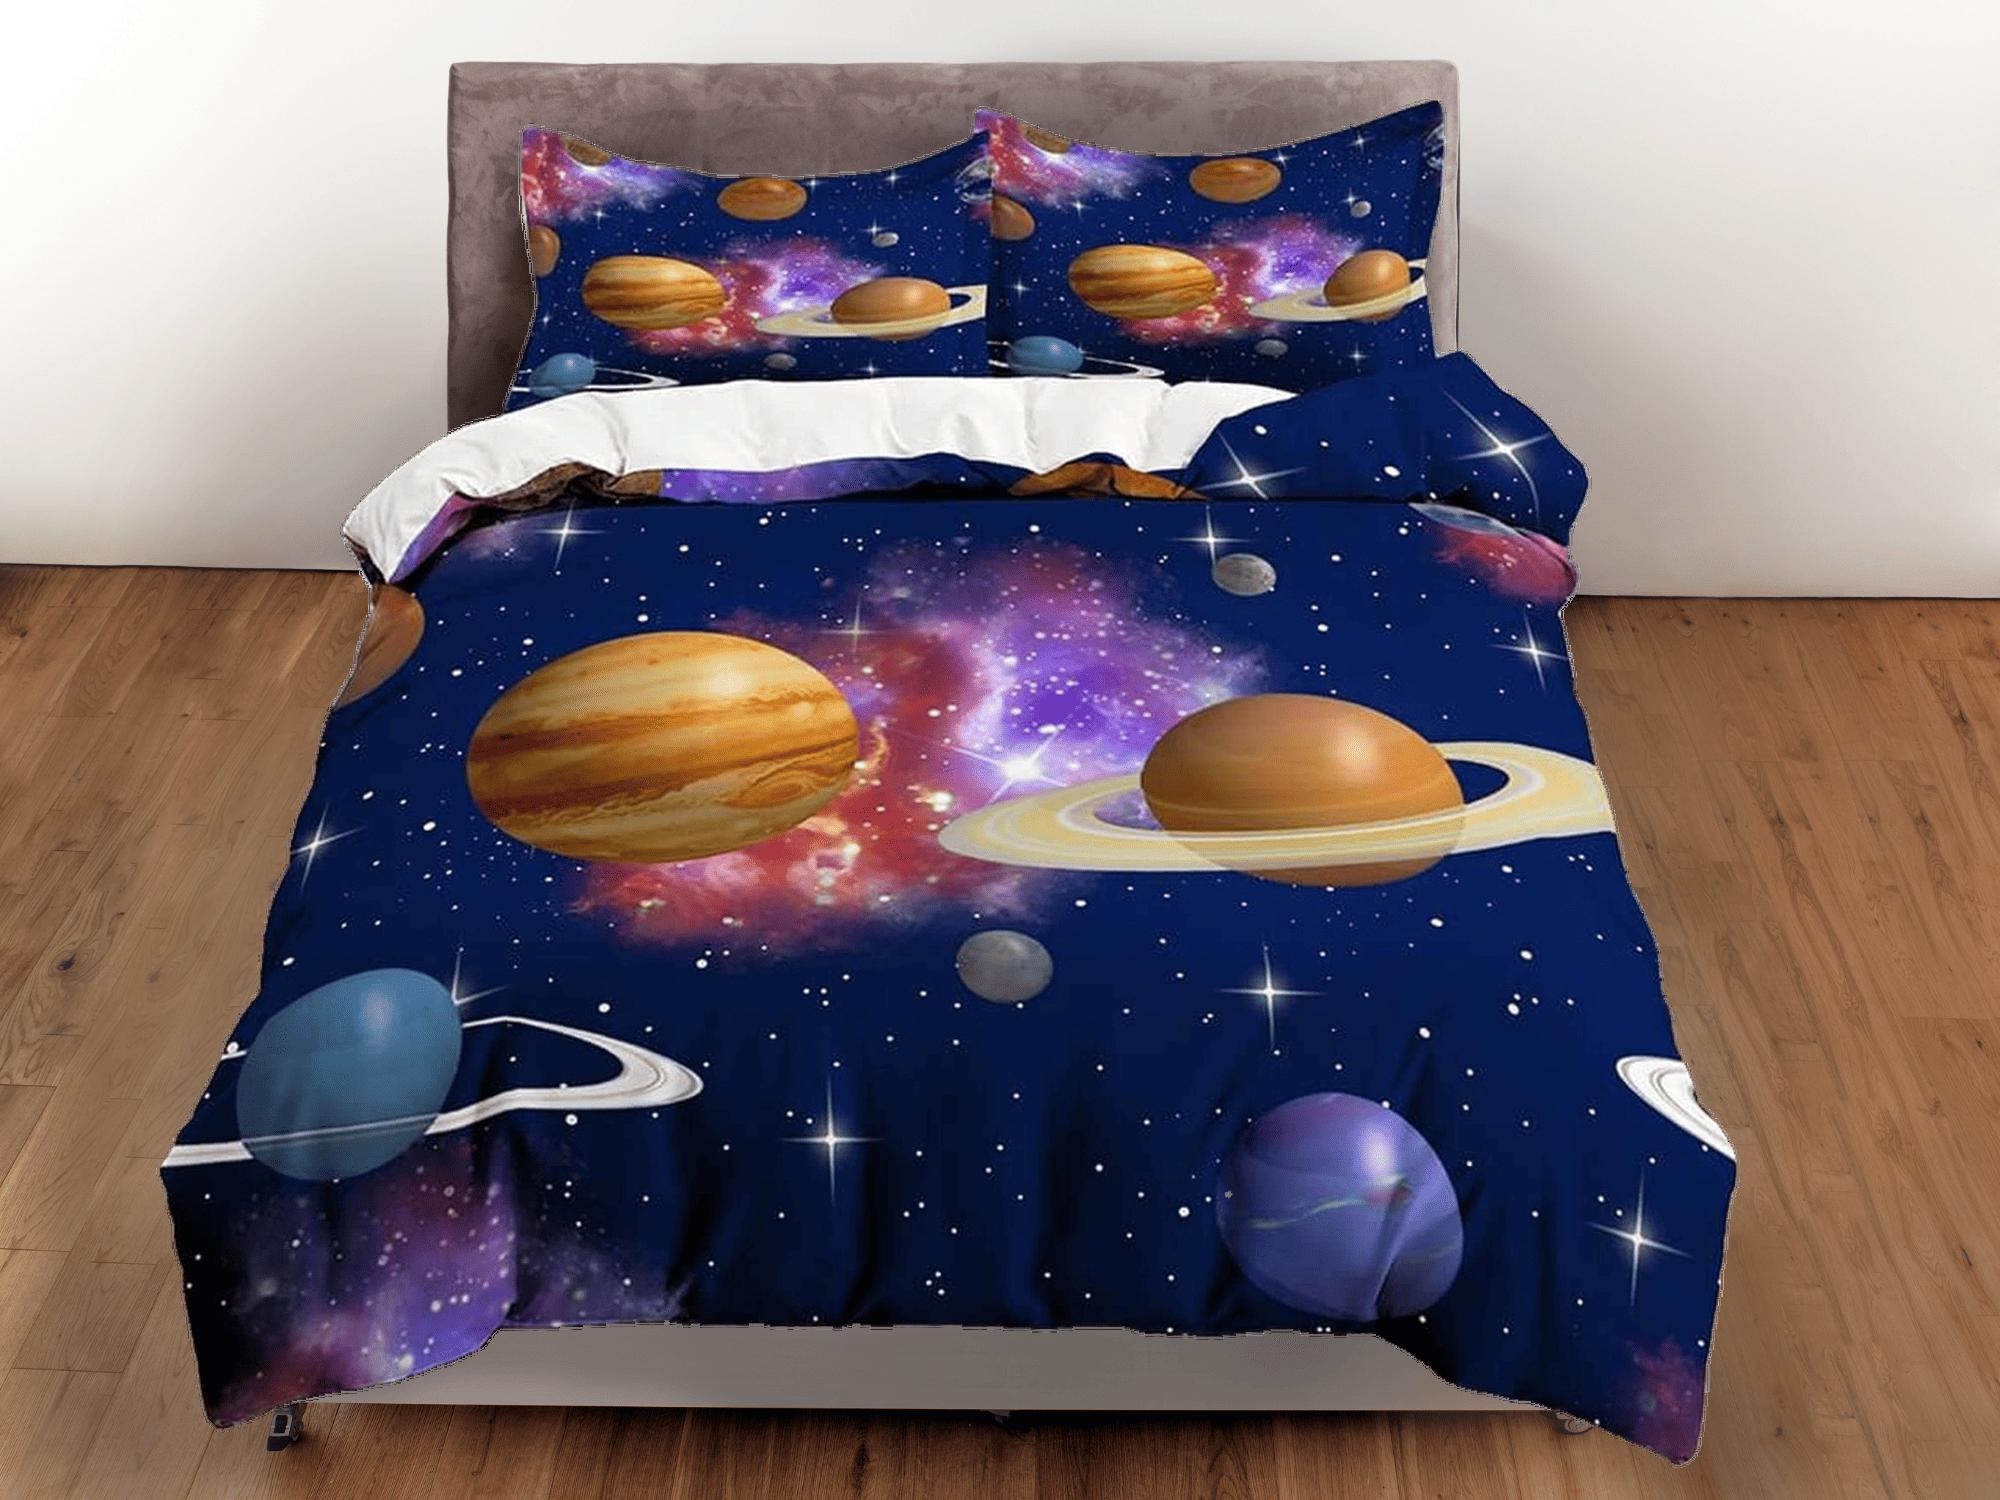 daintyduvet Outer space planets bedding, galaxy bedding set full, cosmic duvet cover king, queen, dorm bedding, toddler bedding aesthetic duvet